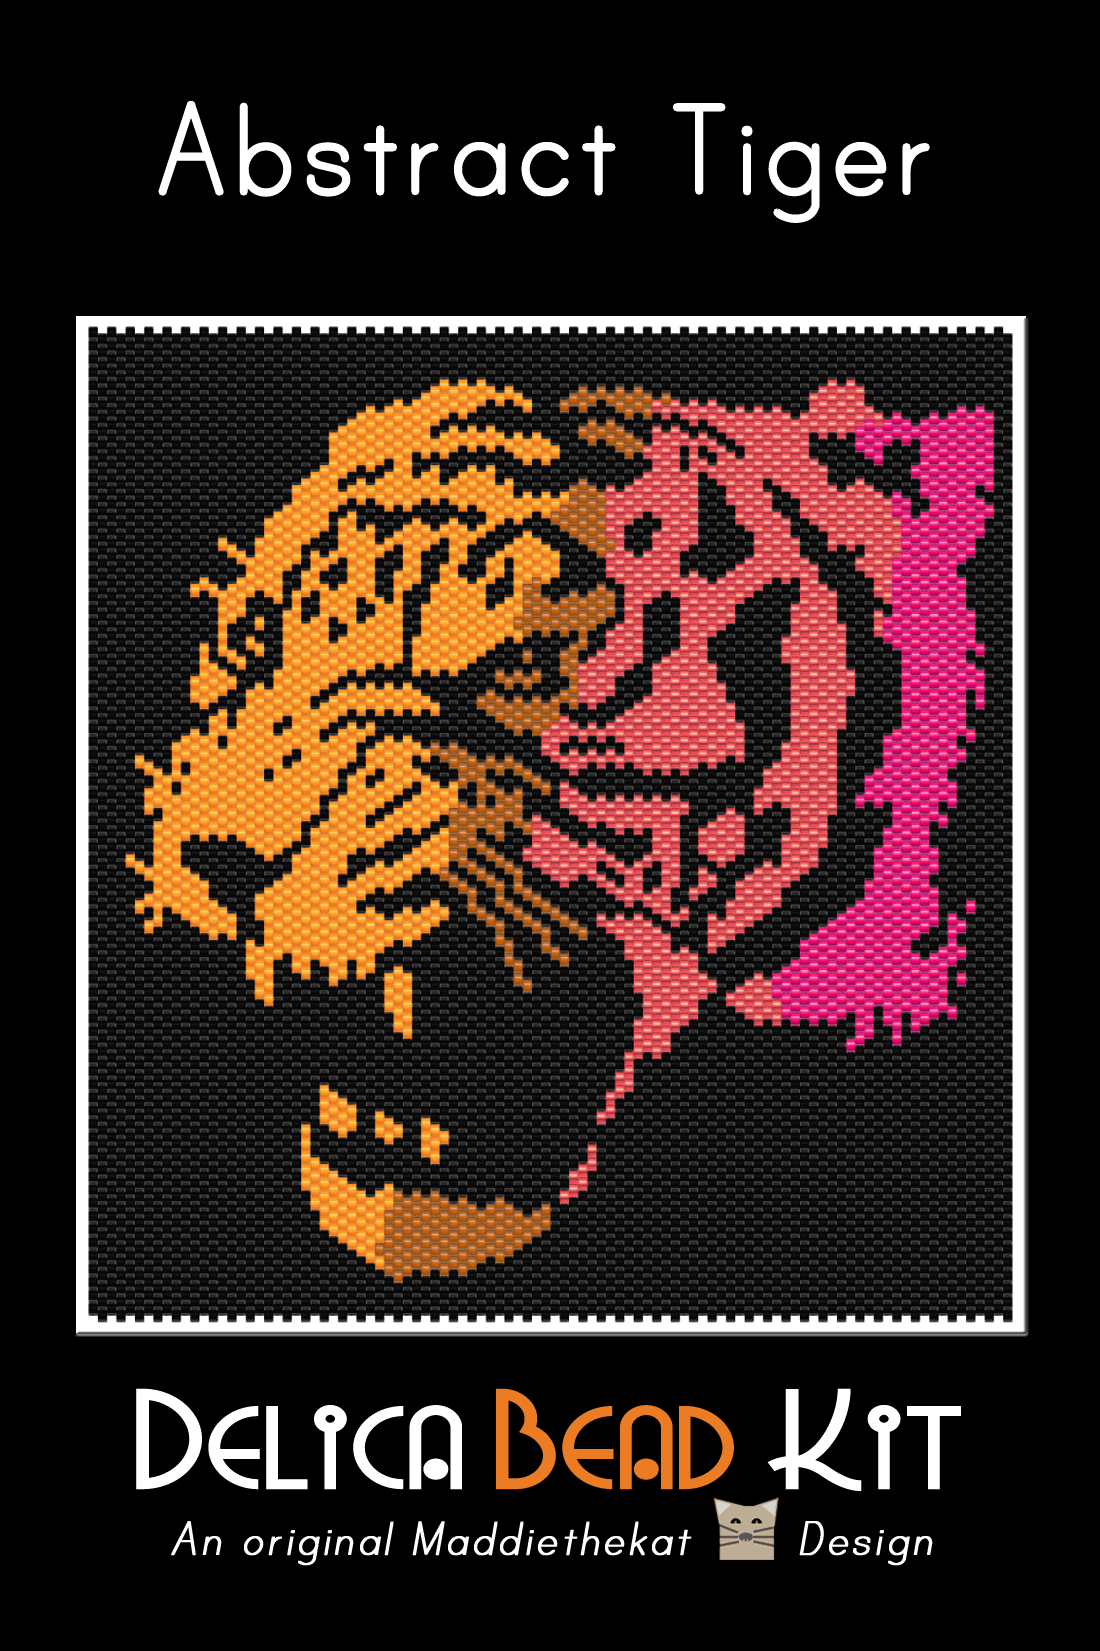 Abstract Tiger Larger Peyote Bead Pattern or Bead Kit